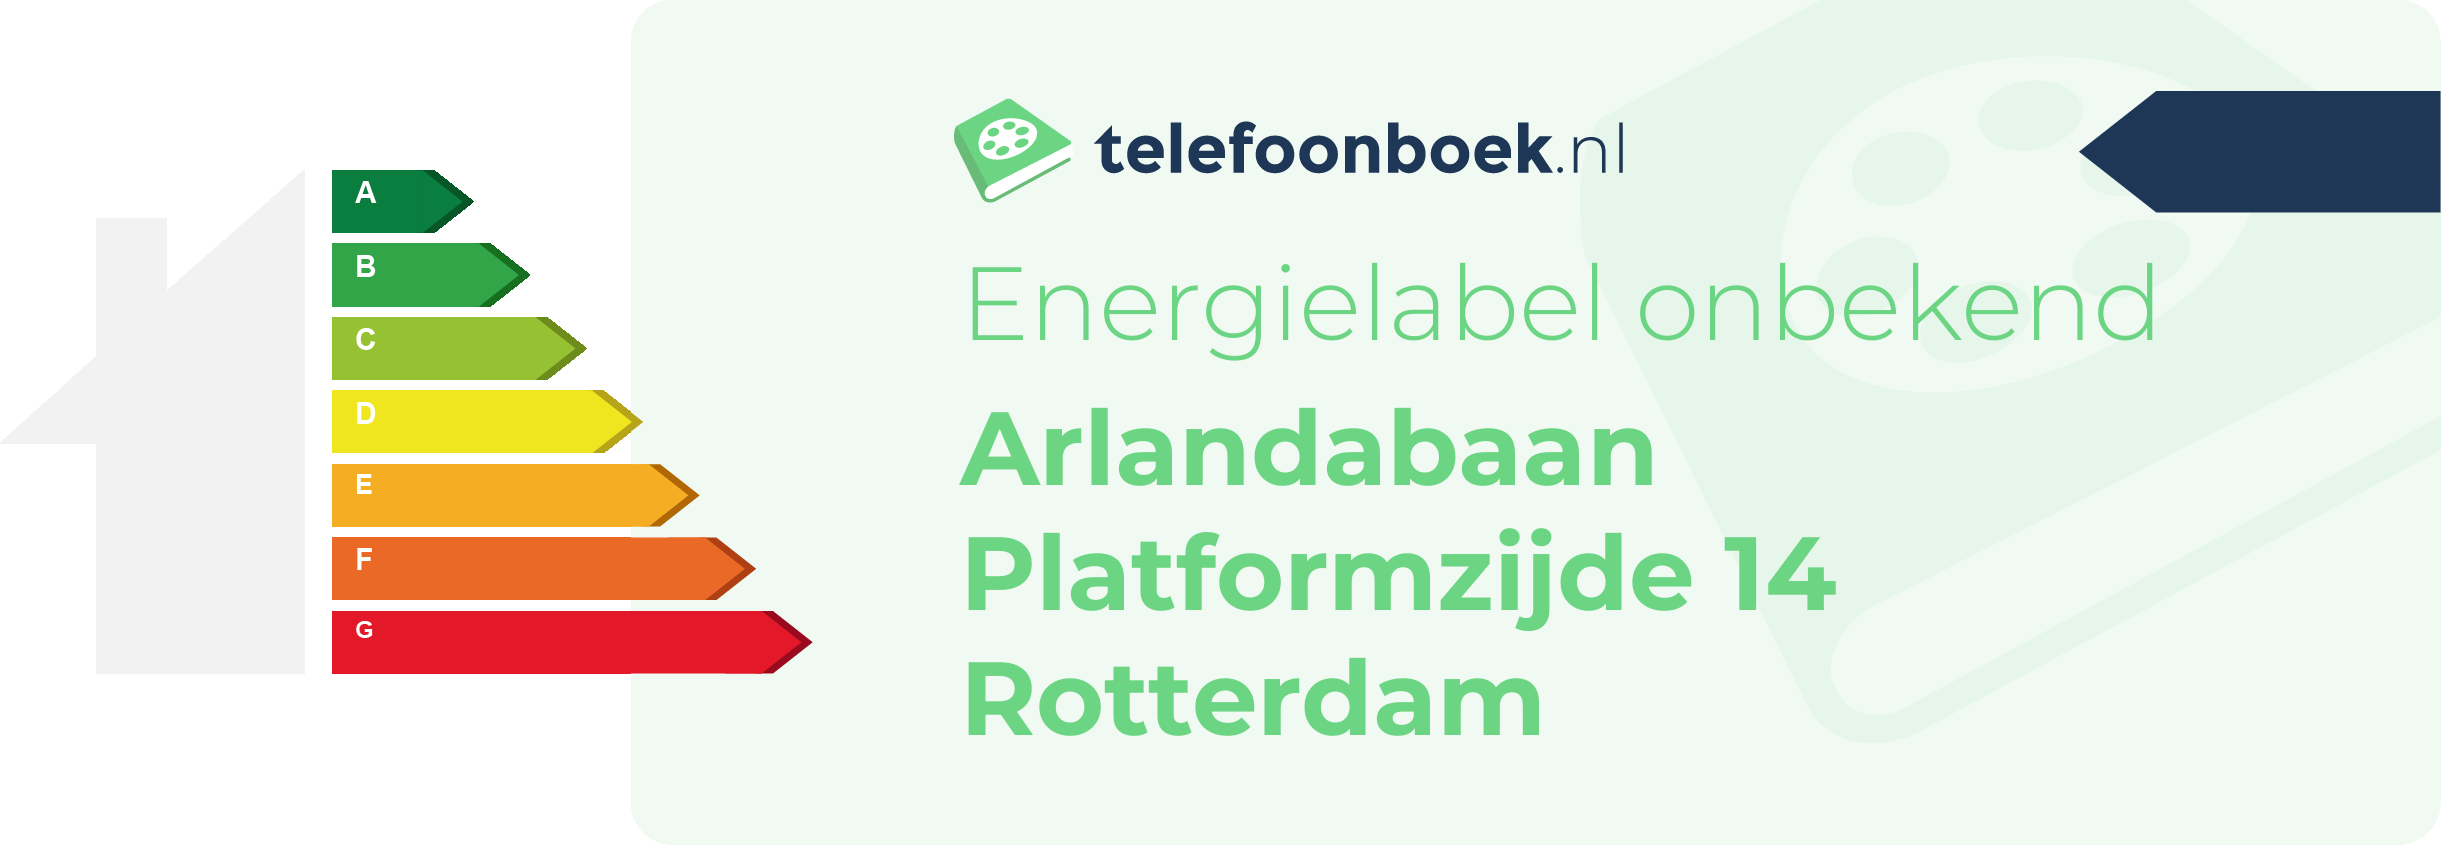 Energielabel Arlandabaan Platformzijde 14 Rotterdam